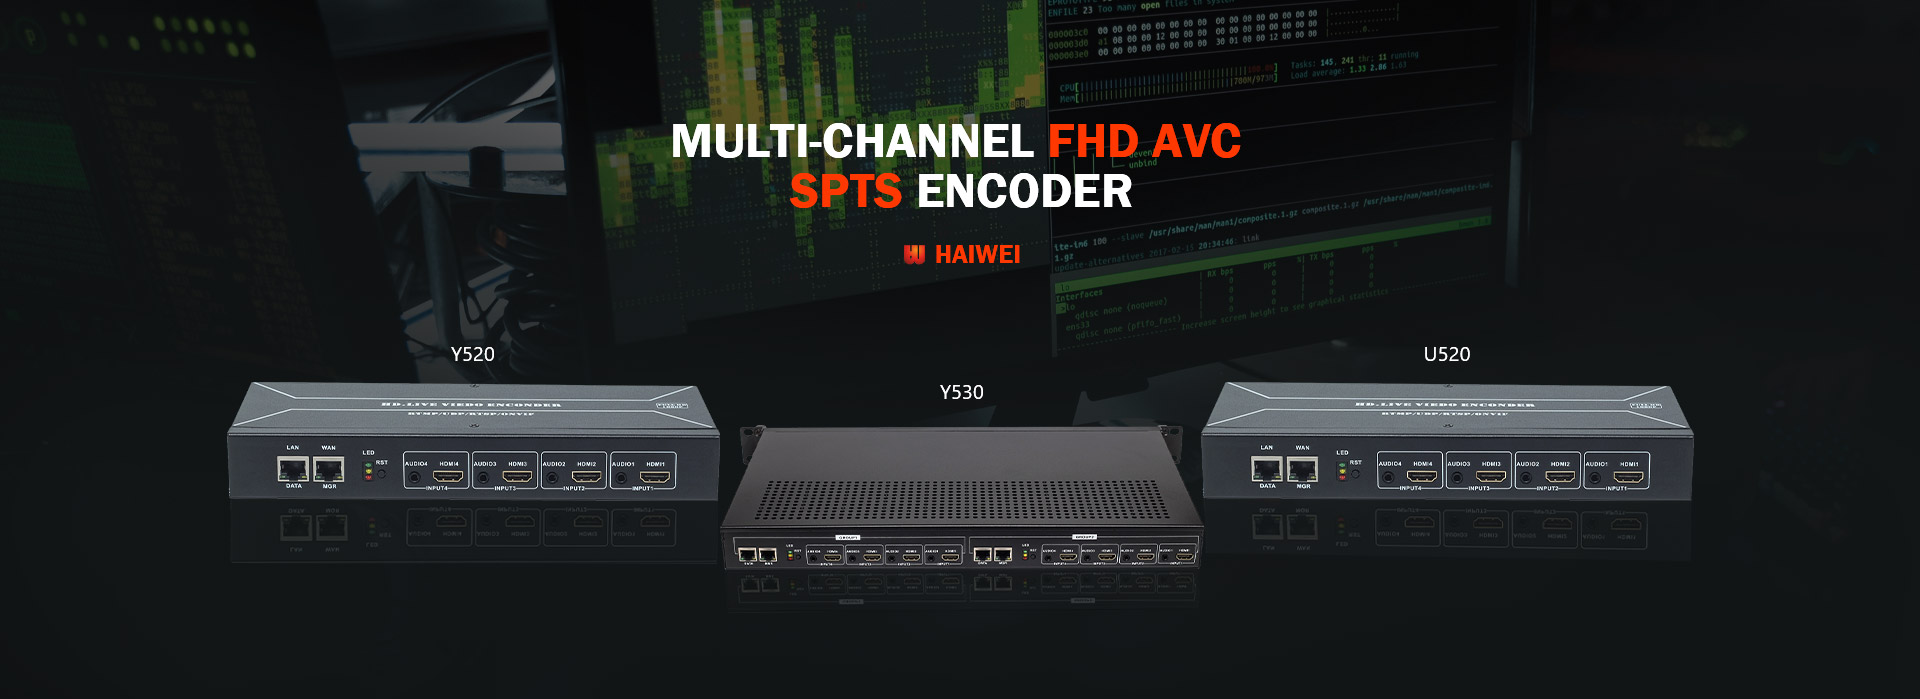 Multi-channel FHD AVC SPTS Encoder